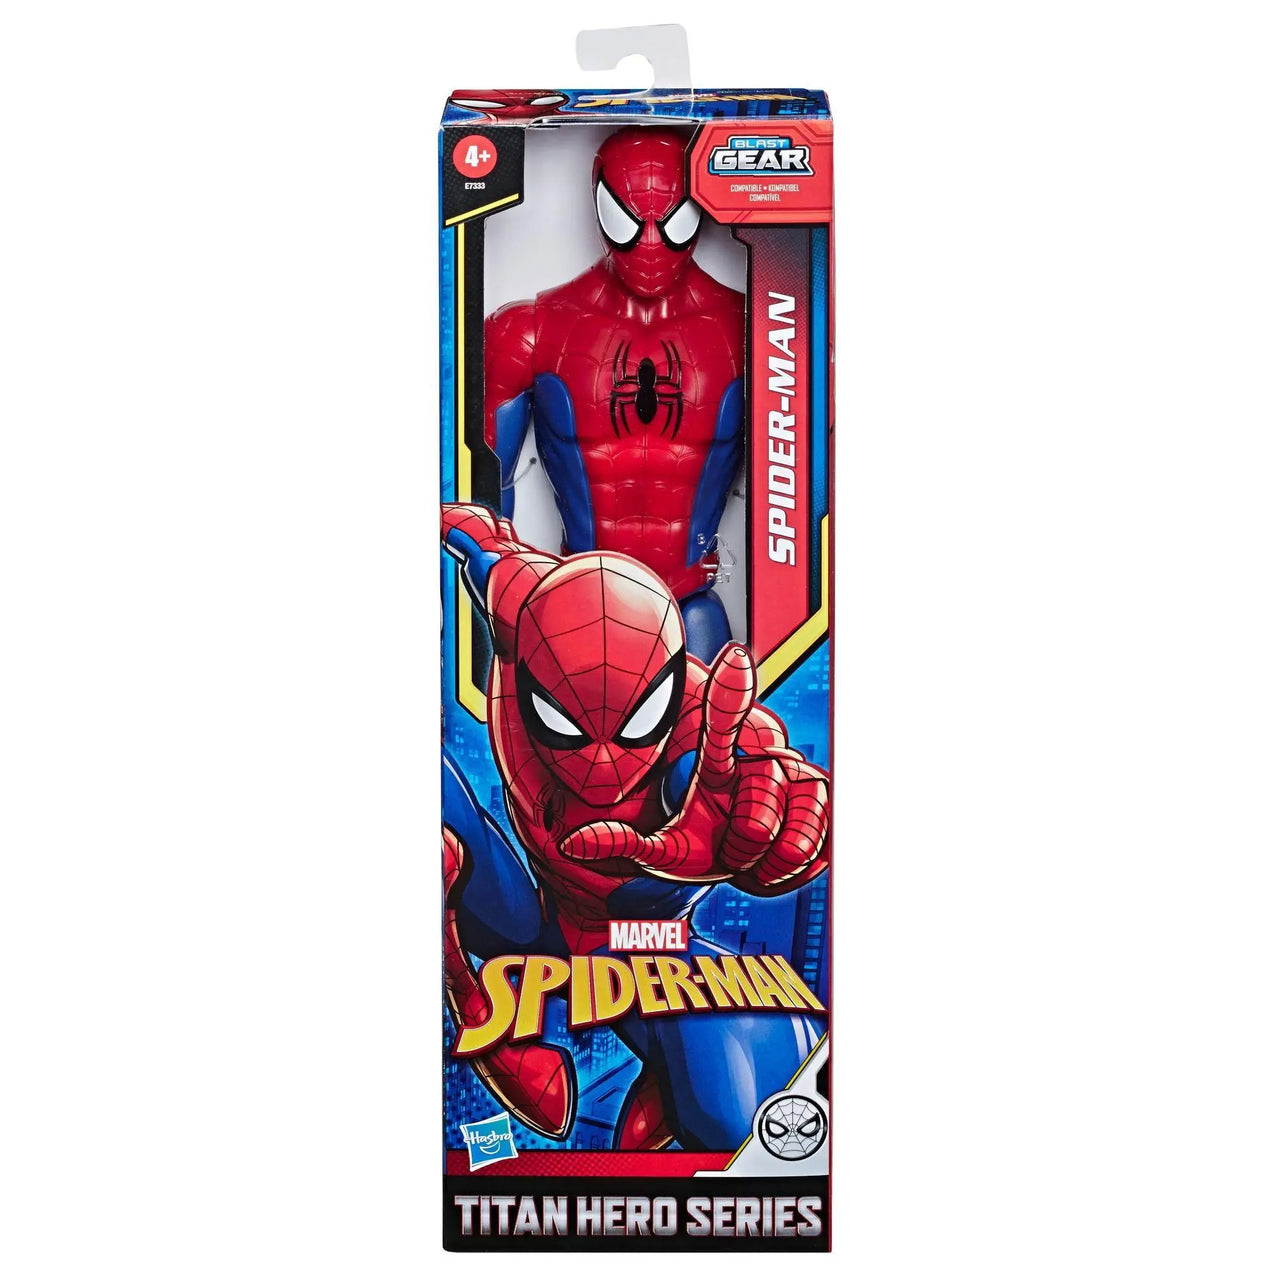 Spiderman Titan Hero Series 12 Figure